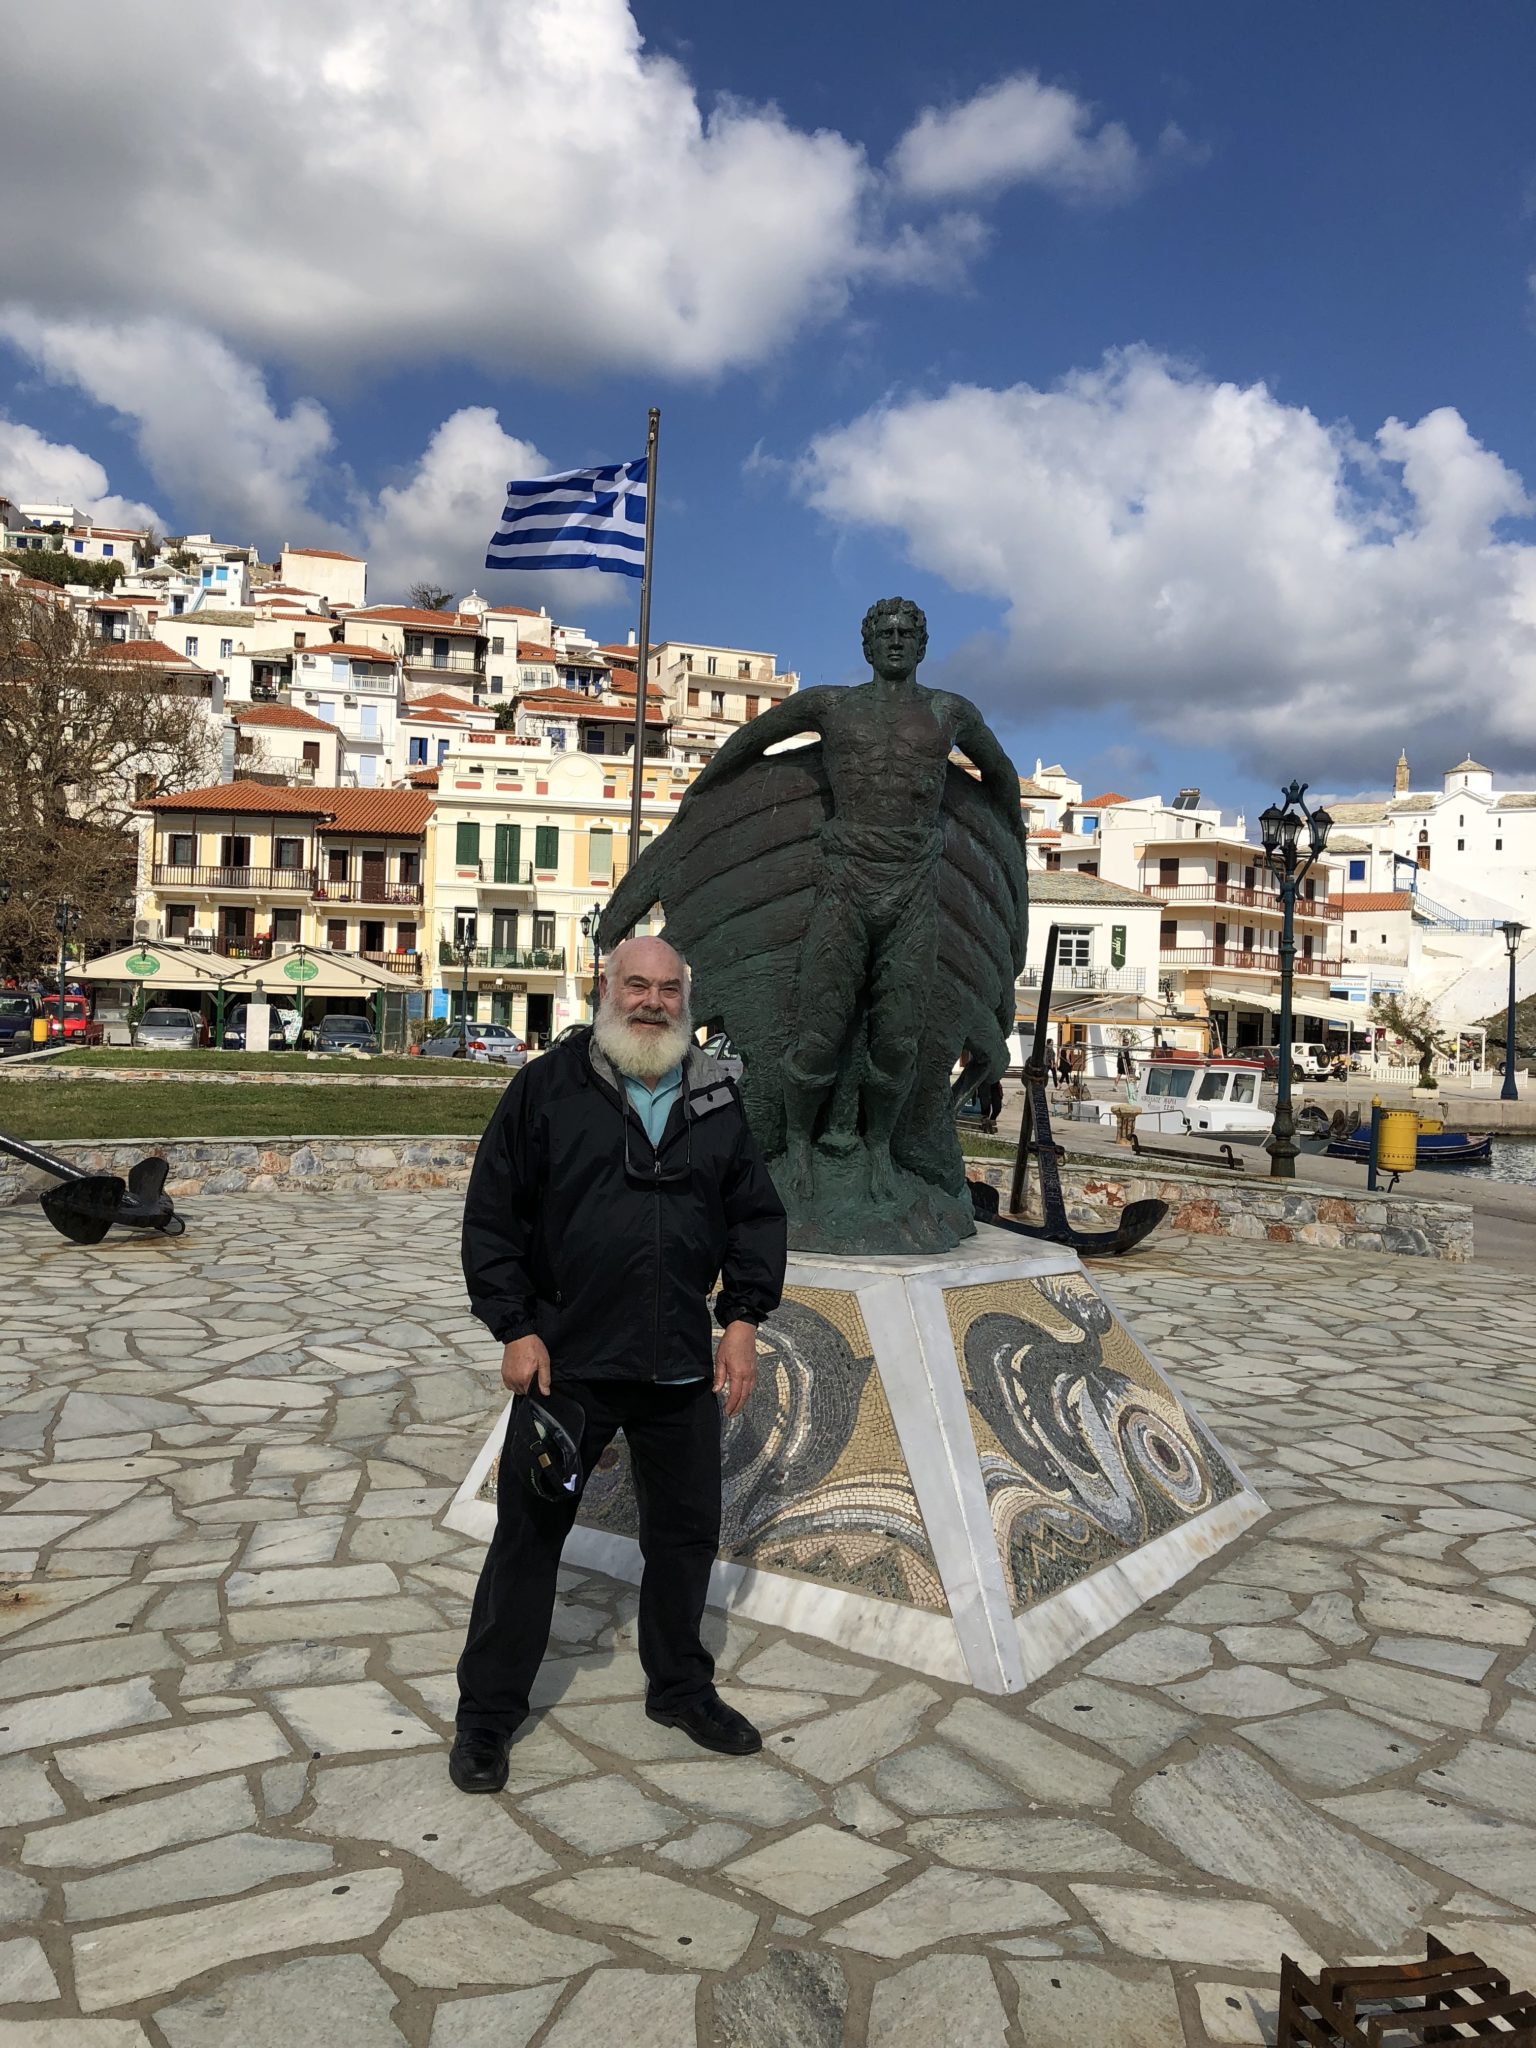 2 Statue at Skopelos Port_20181007_4068